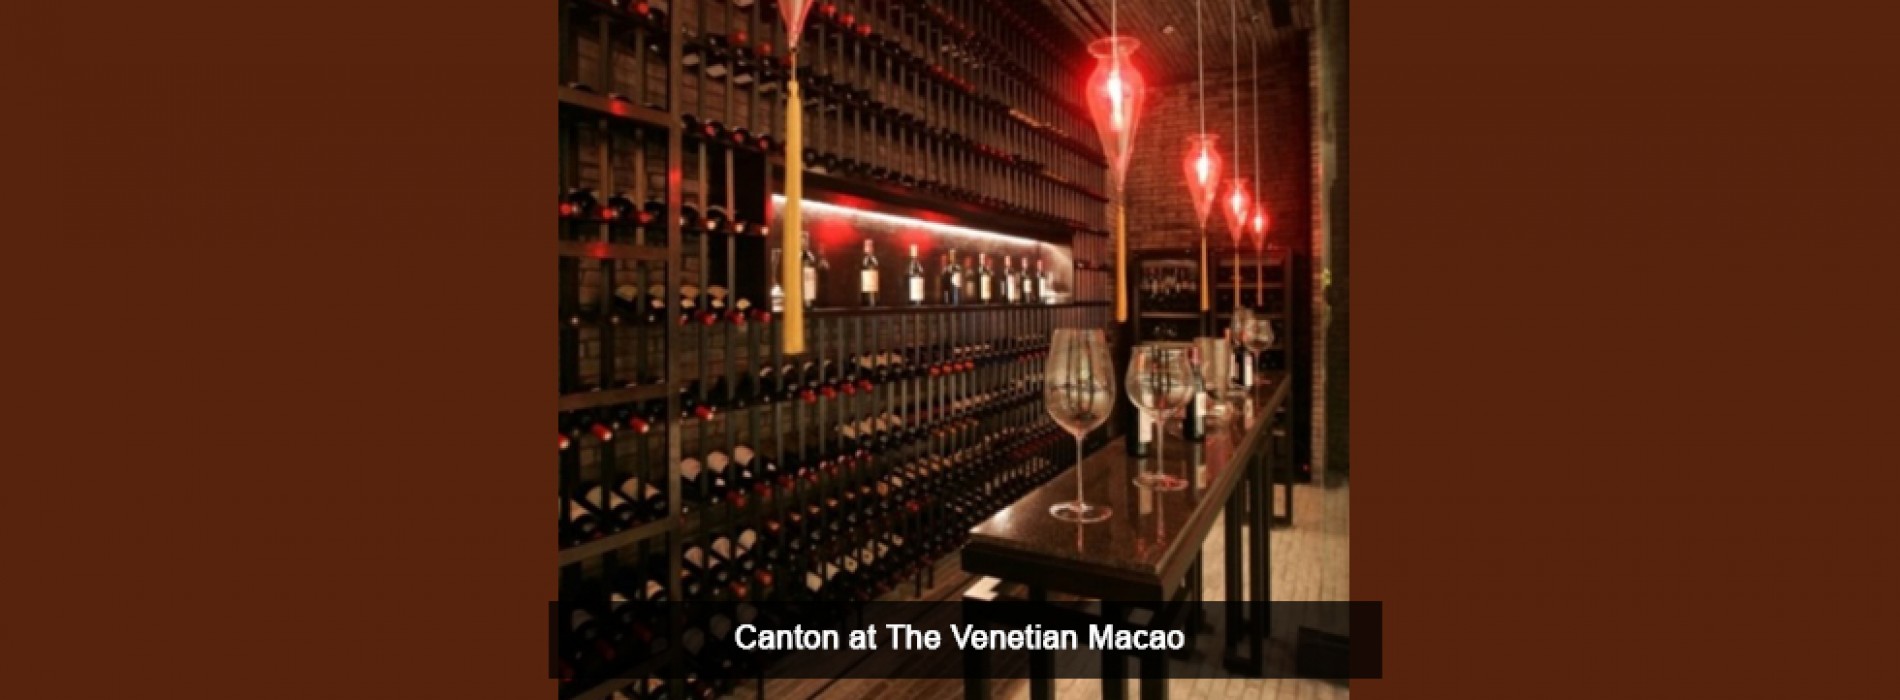 Eleven Sands Resorts Macao and Sands Macao Restaurants receive Wine Spectator Awards